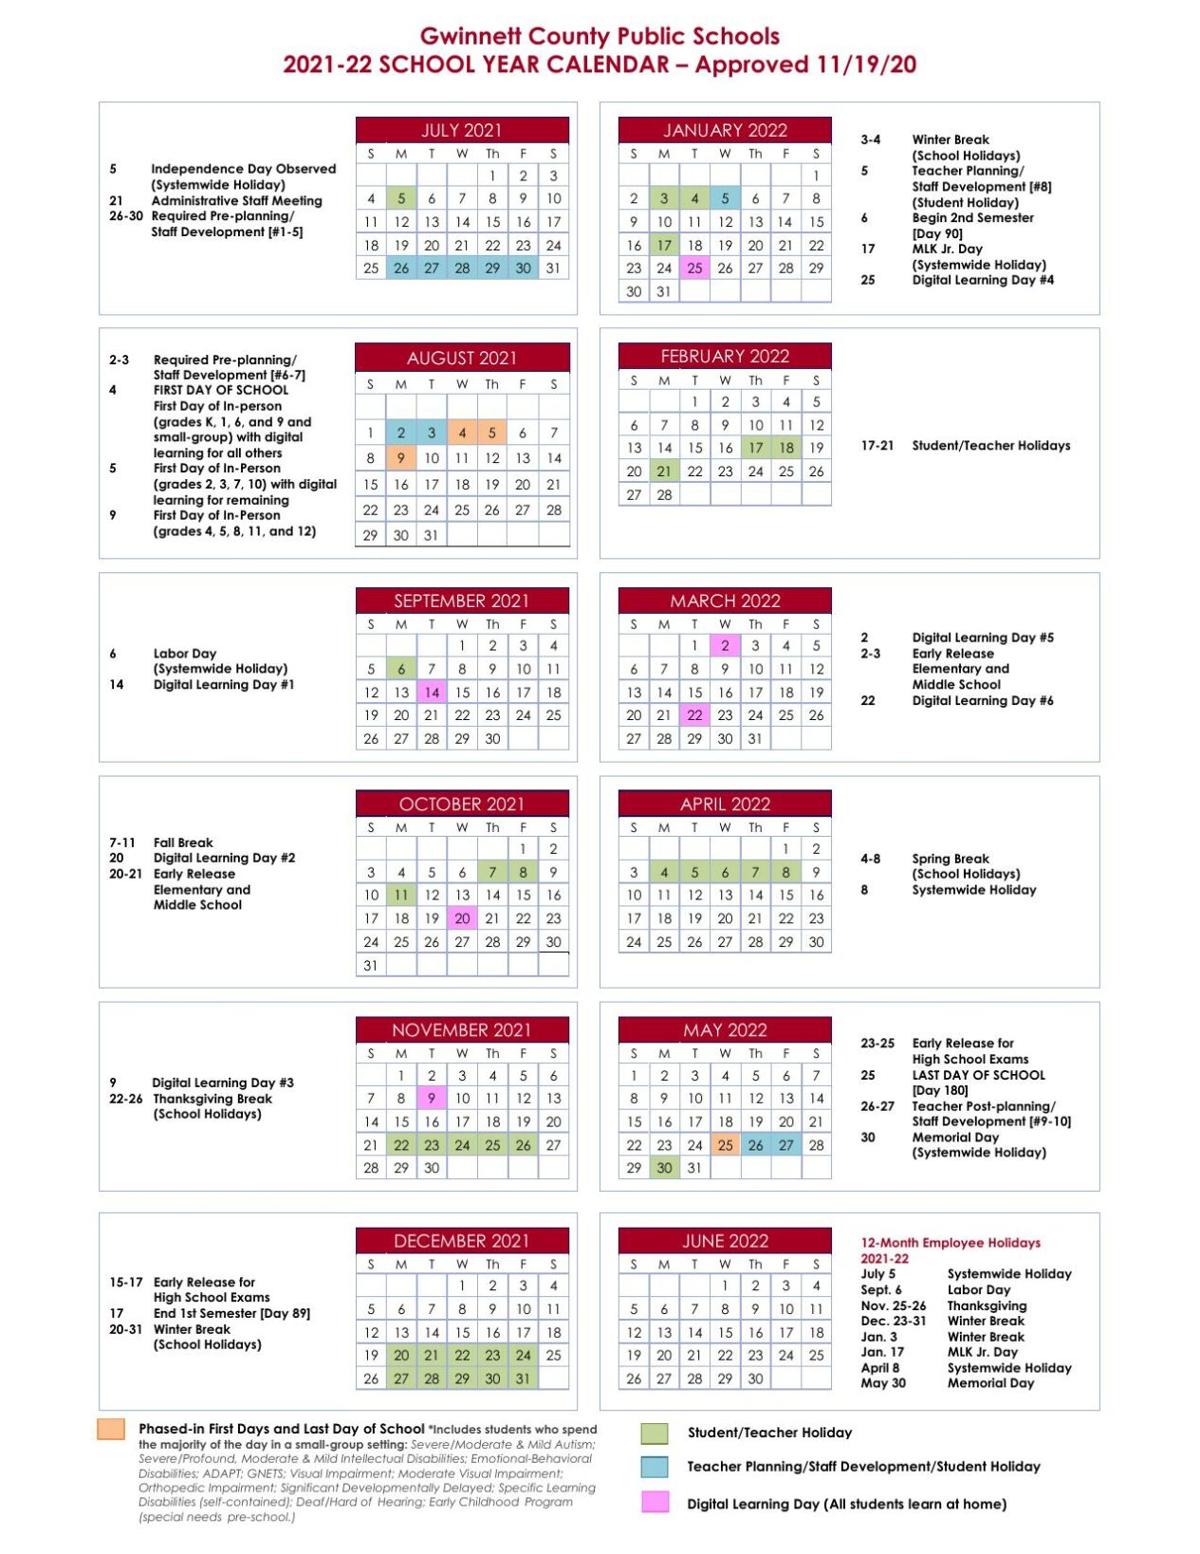 Gatech Spring 2022 Calendar Gwinnett County Public Schools' 2021-2022 School Year Calendar | |  Gwinnettdailypost.com